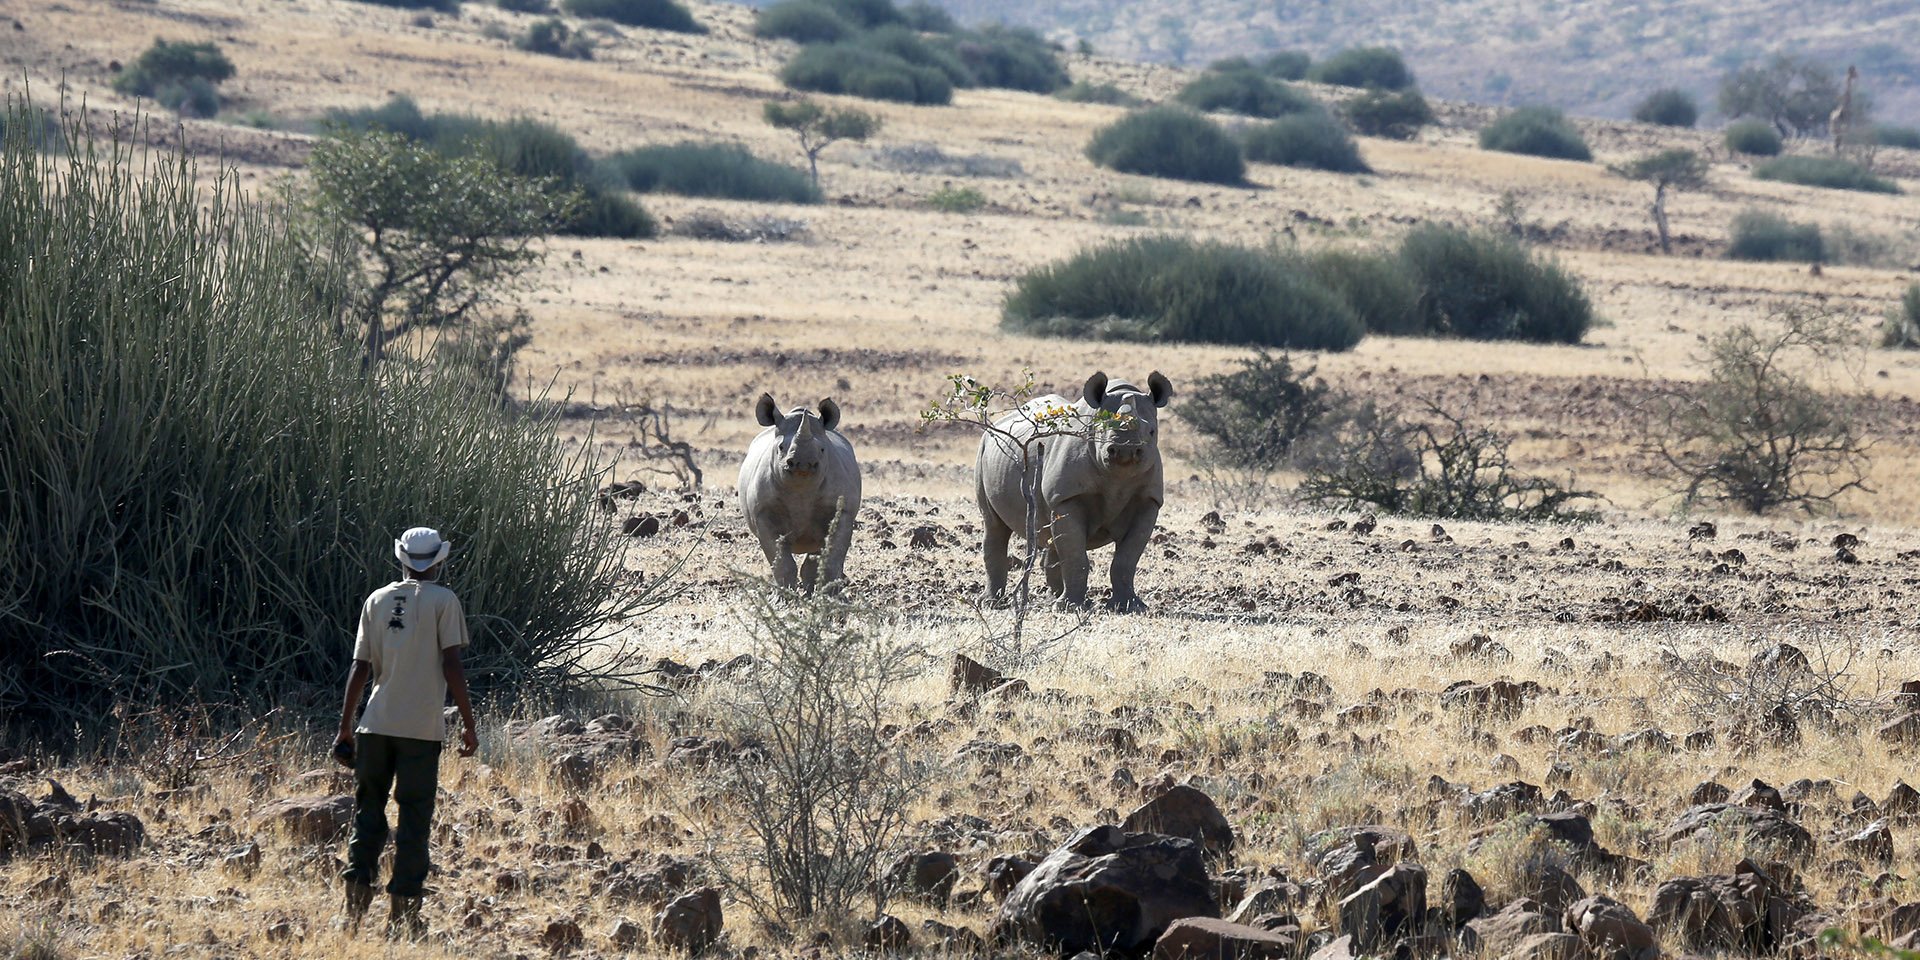 Two rhinos, Namibia